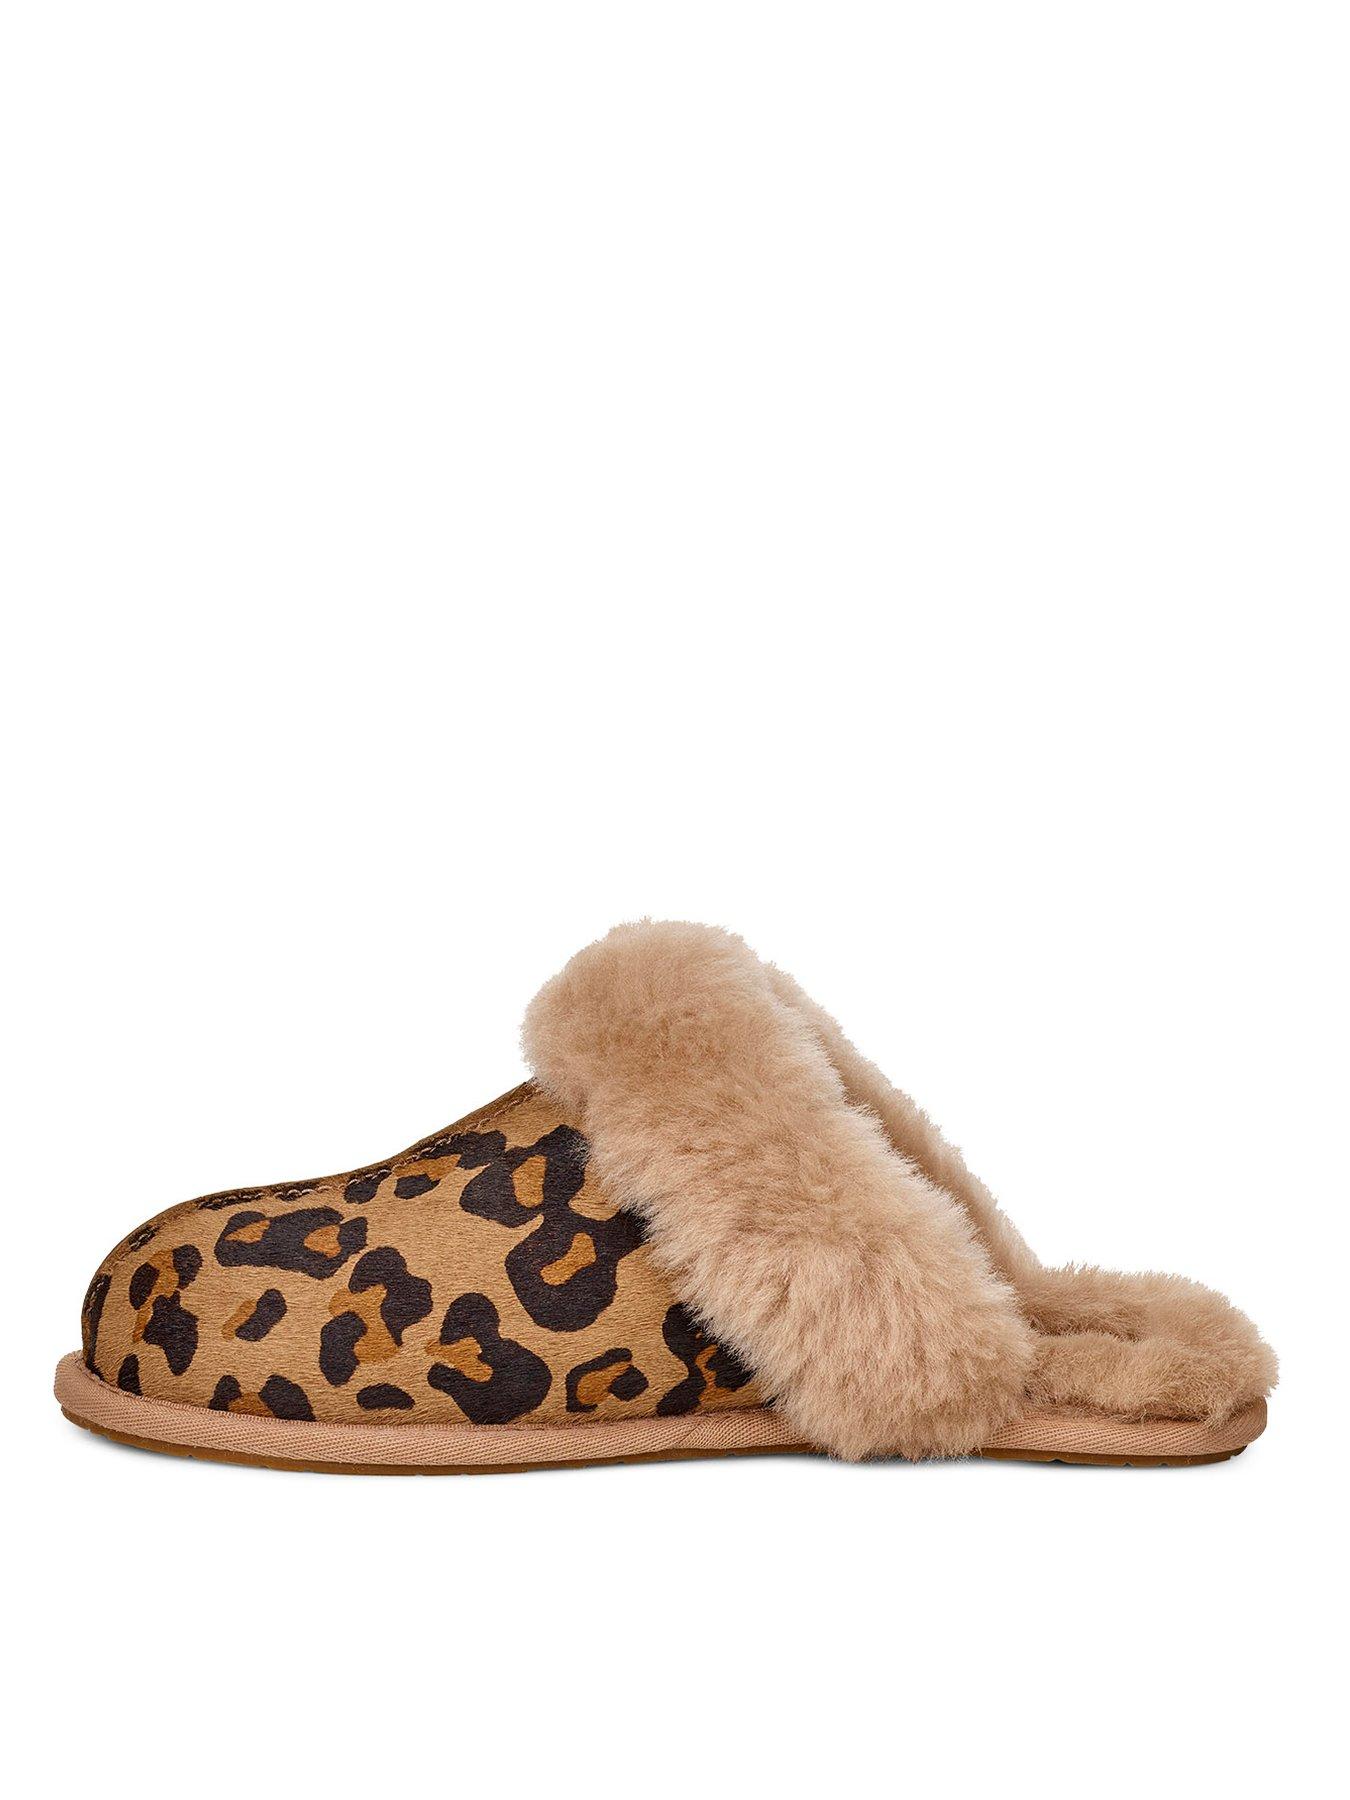 ugg animal print slippers